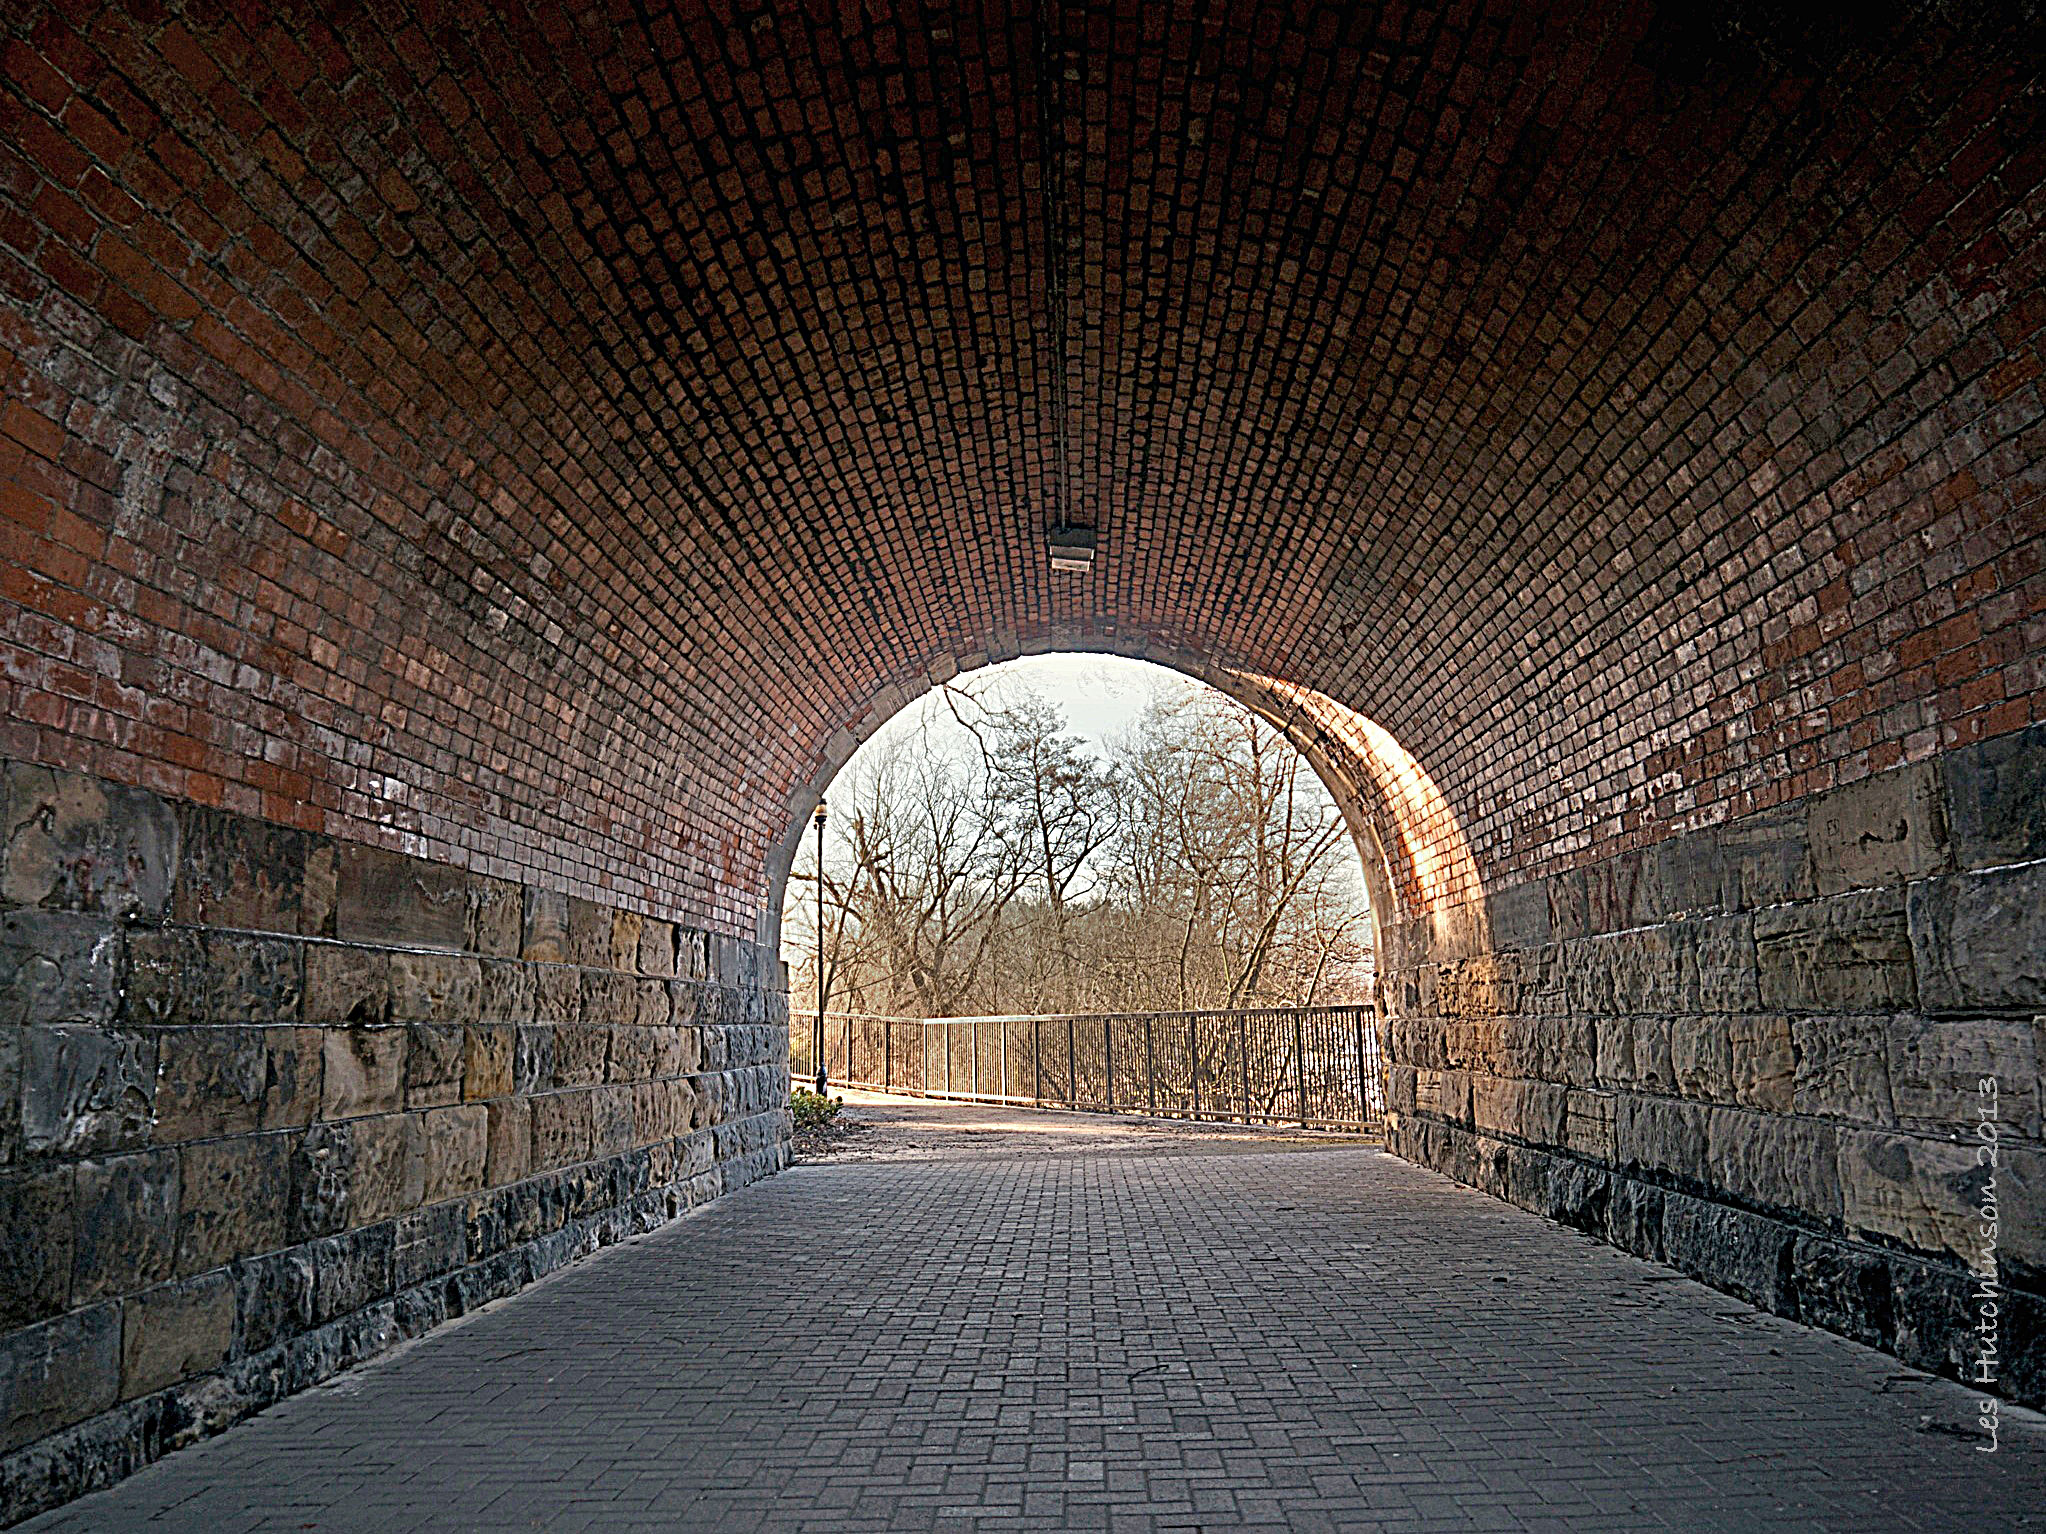 2013-feb-23-tunnel-hdr.jpg